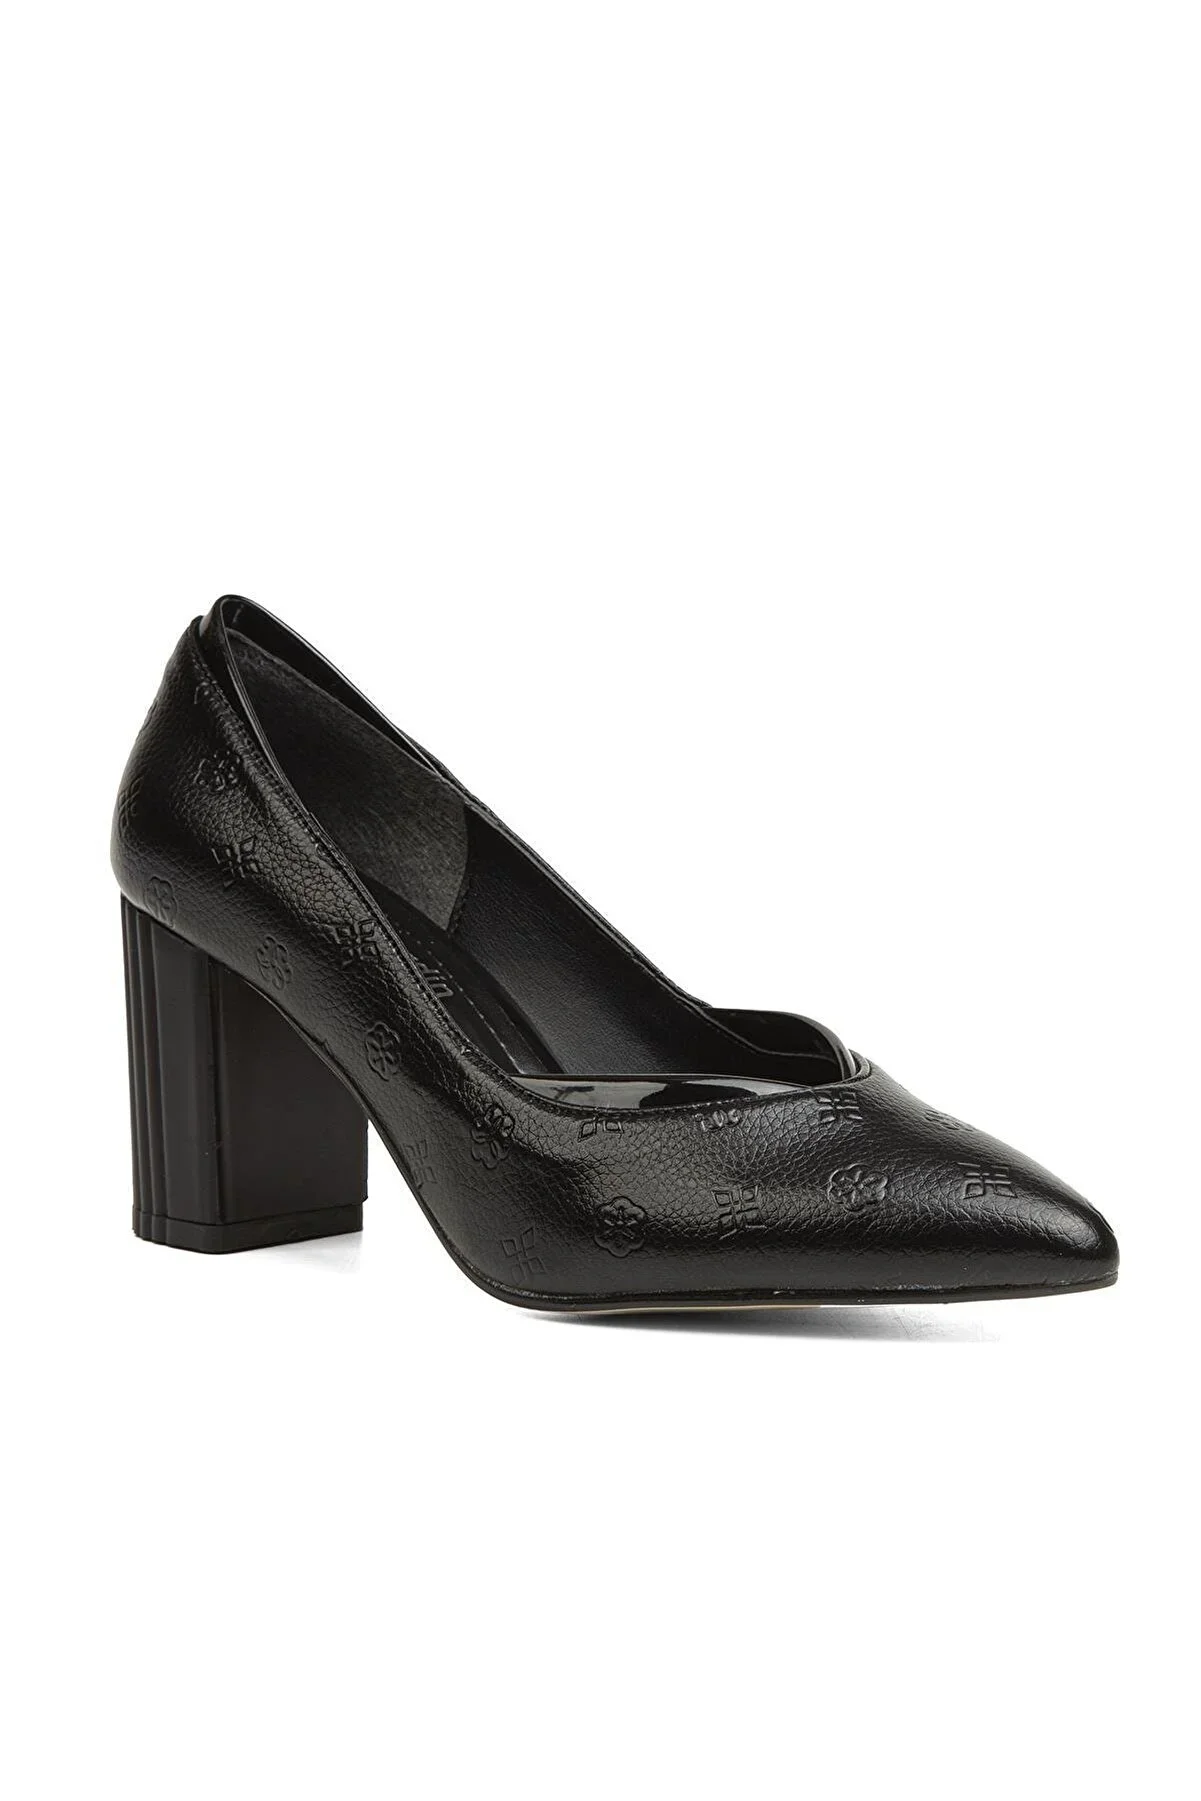 Kadın Topuklu Ayakkabı PC-51199-Siyah - 1